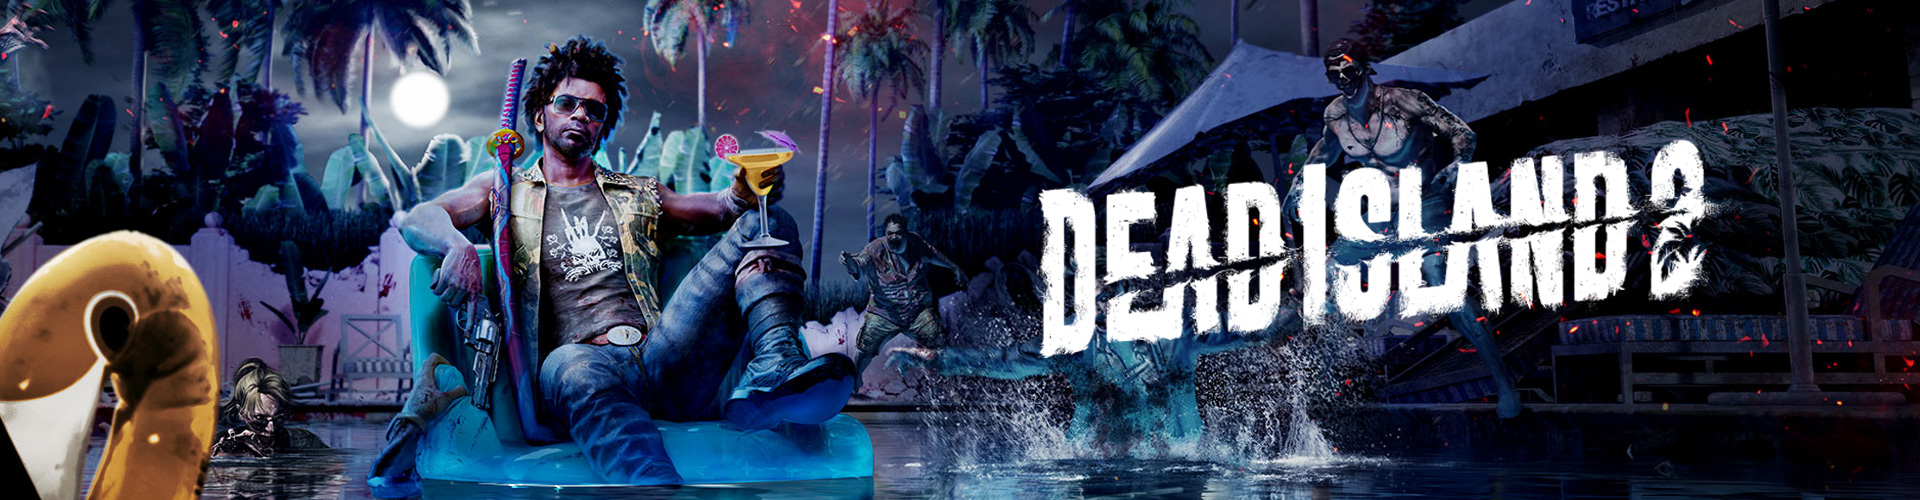 Dead Island 2 est un jeu dâhorreur multijoueur